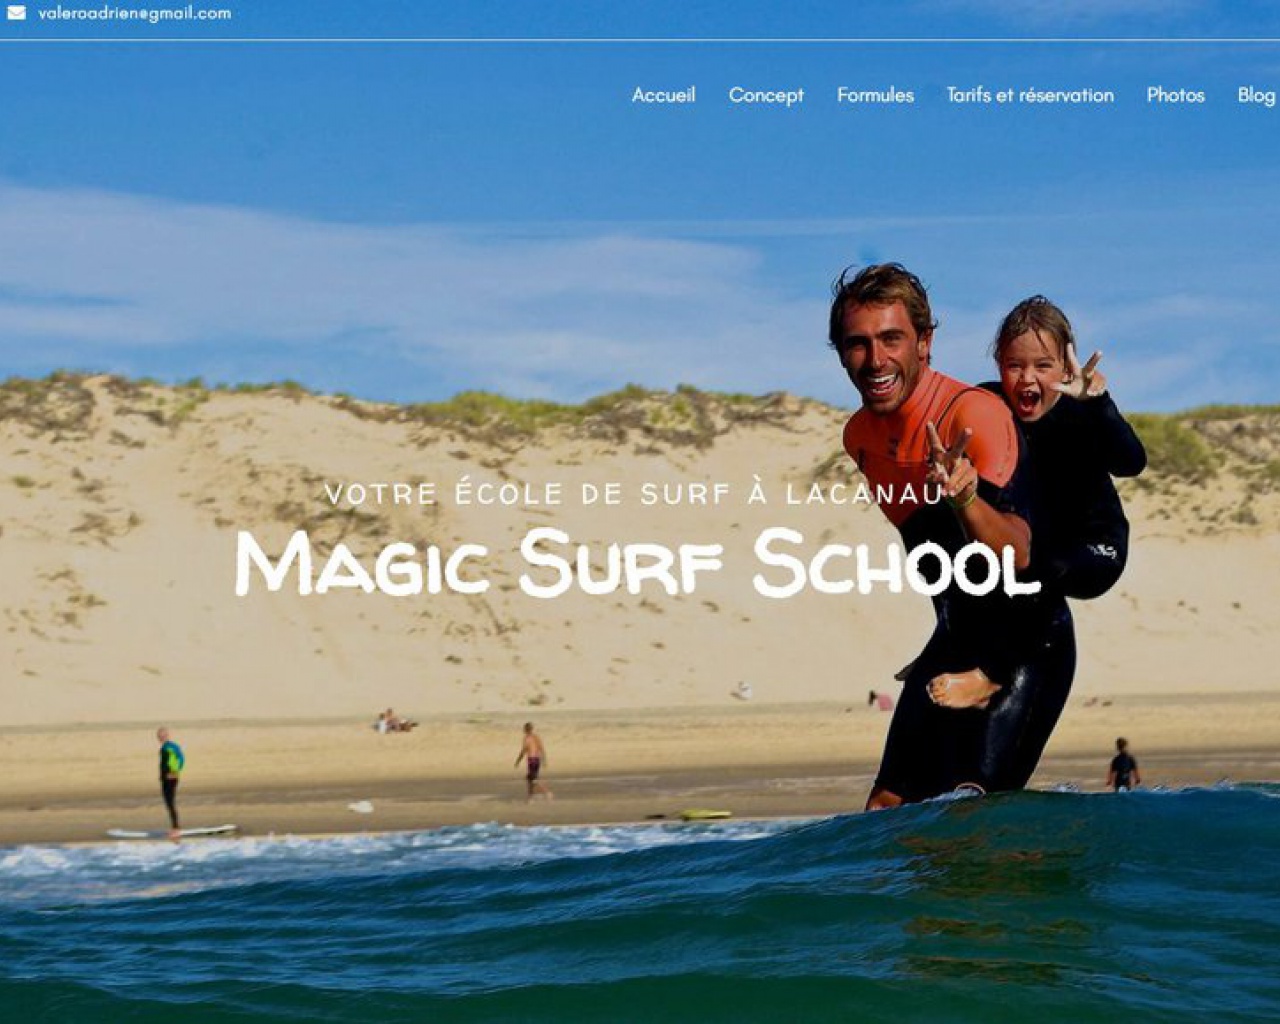 MAGIC SURF SCHOOL